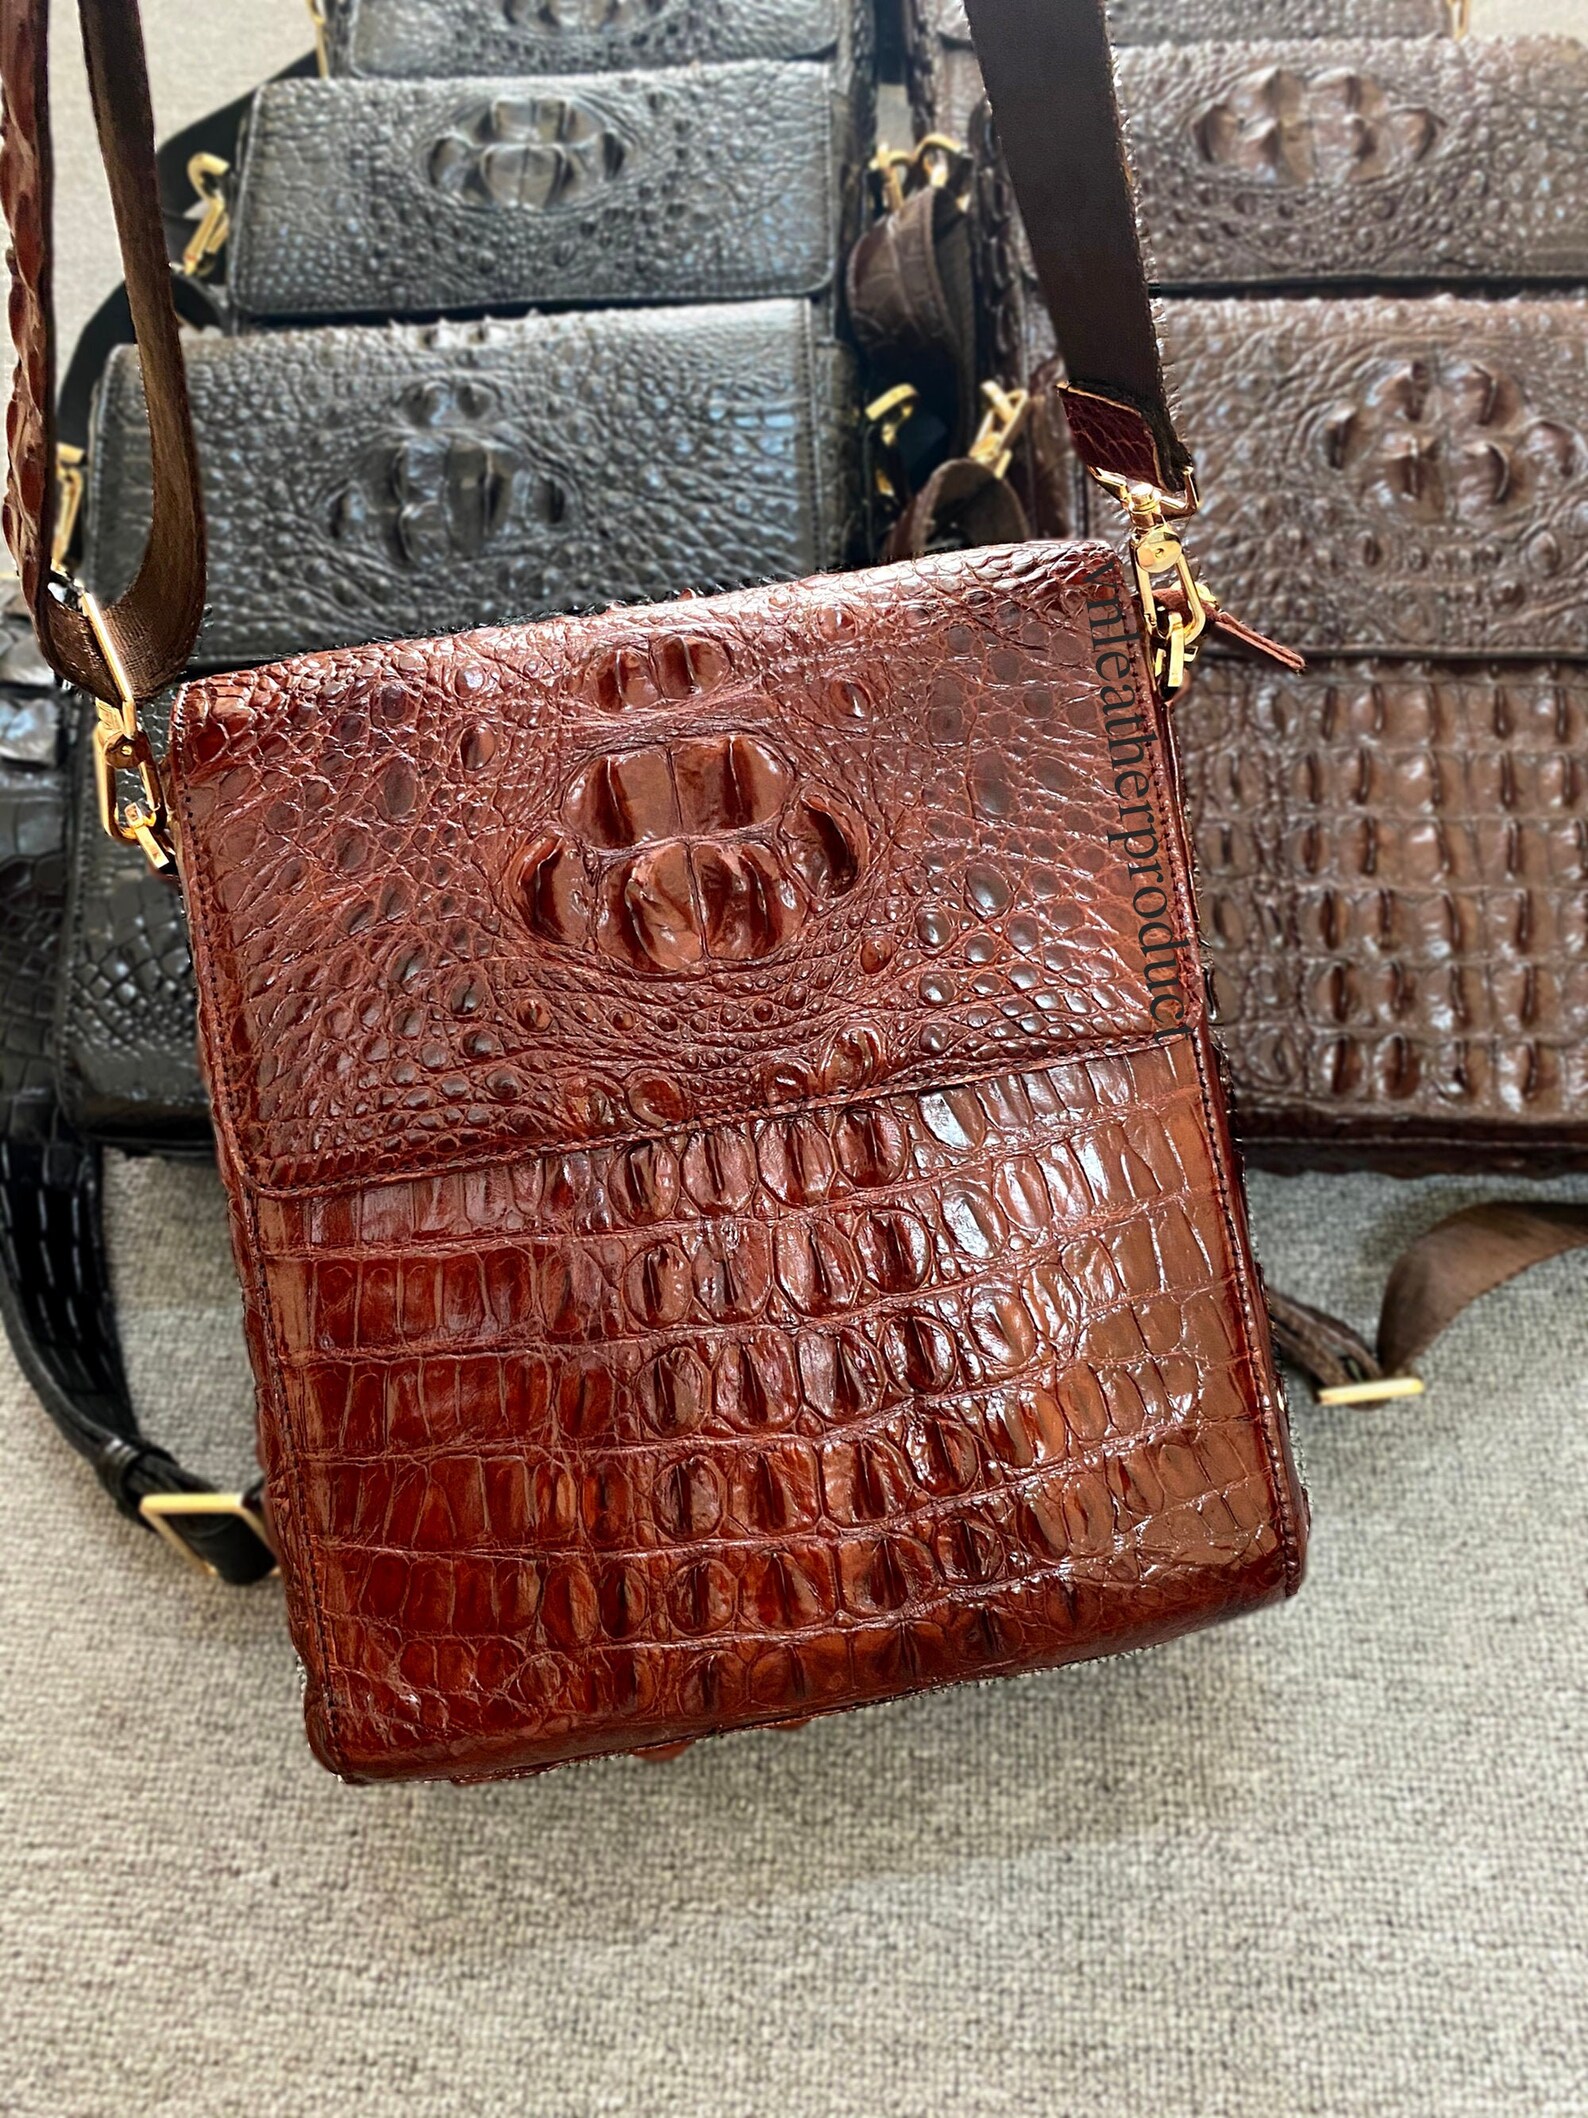 Sepia Crossbody menCrocodile leather bagAlligator handbag | Etsy